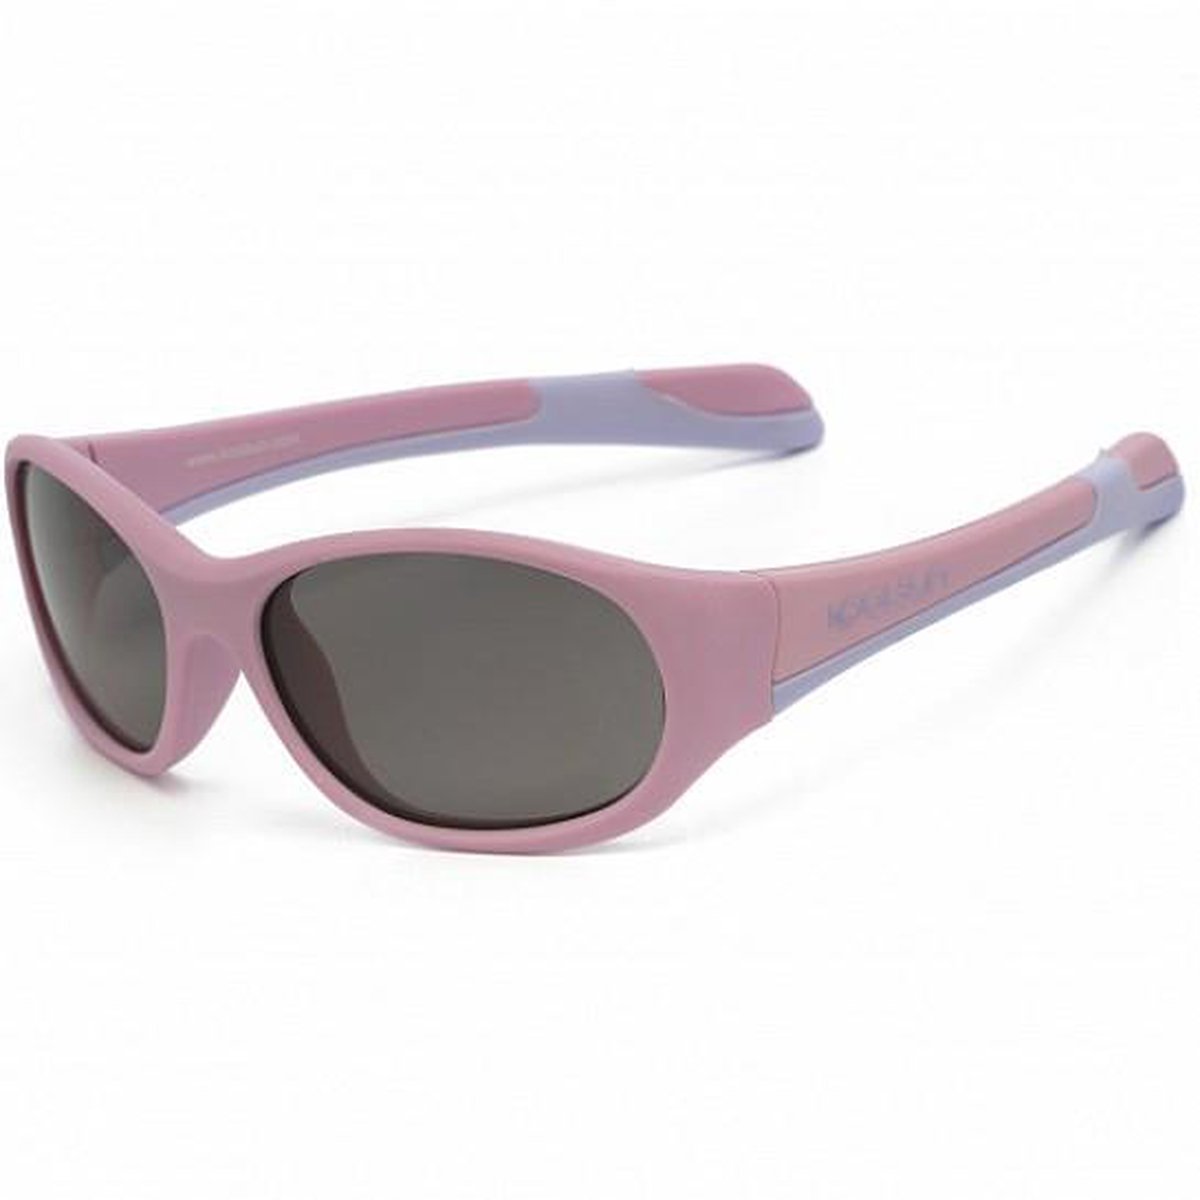 KOOLSUN - Fit - Kinder zonnebril - Pink Lilac Chiffon - 1-3 jaar- UV400 - Categorie 3